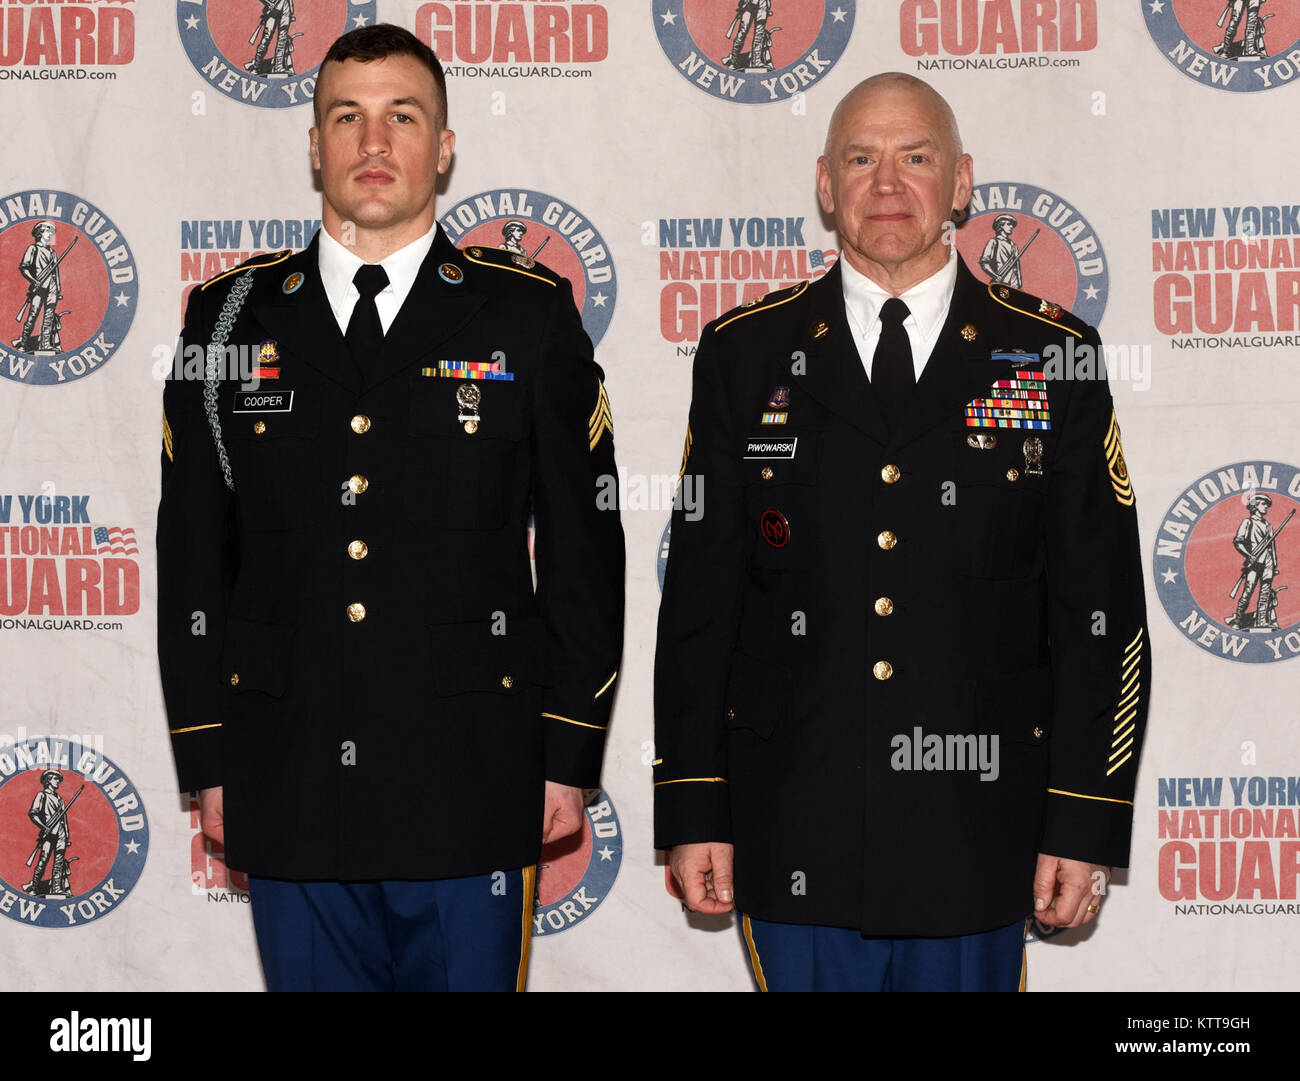 National Guard Uniforms